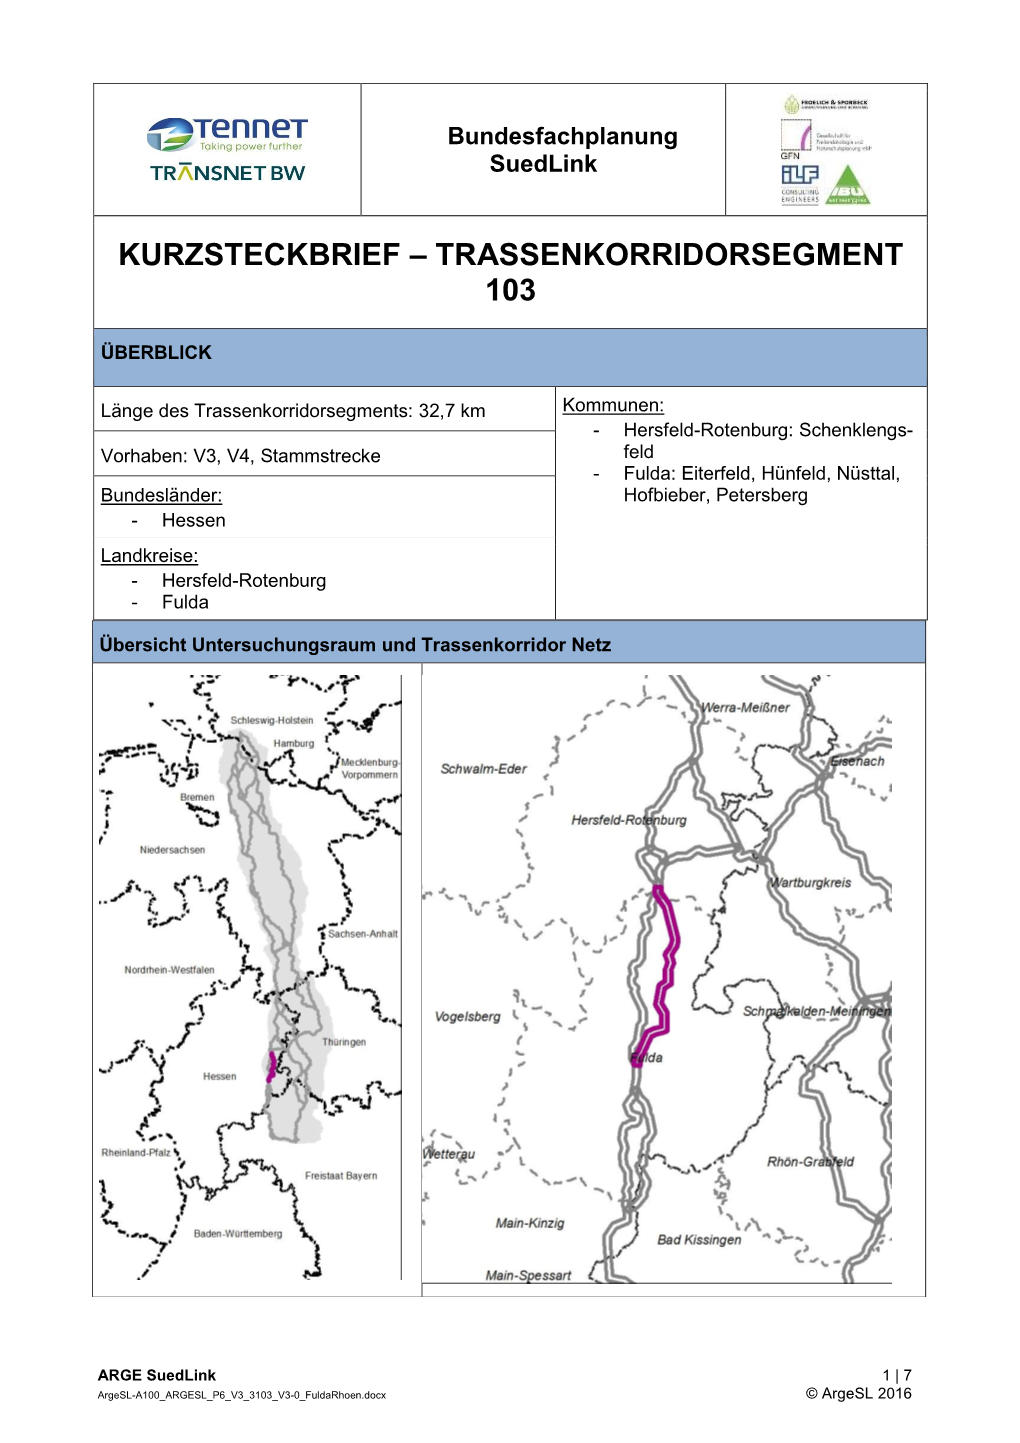 Kurzsteckbrief – Trassenkorridorsegment 103